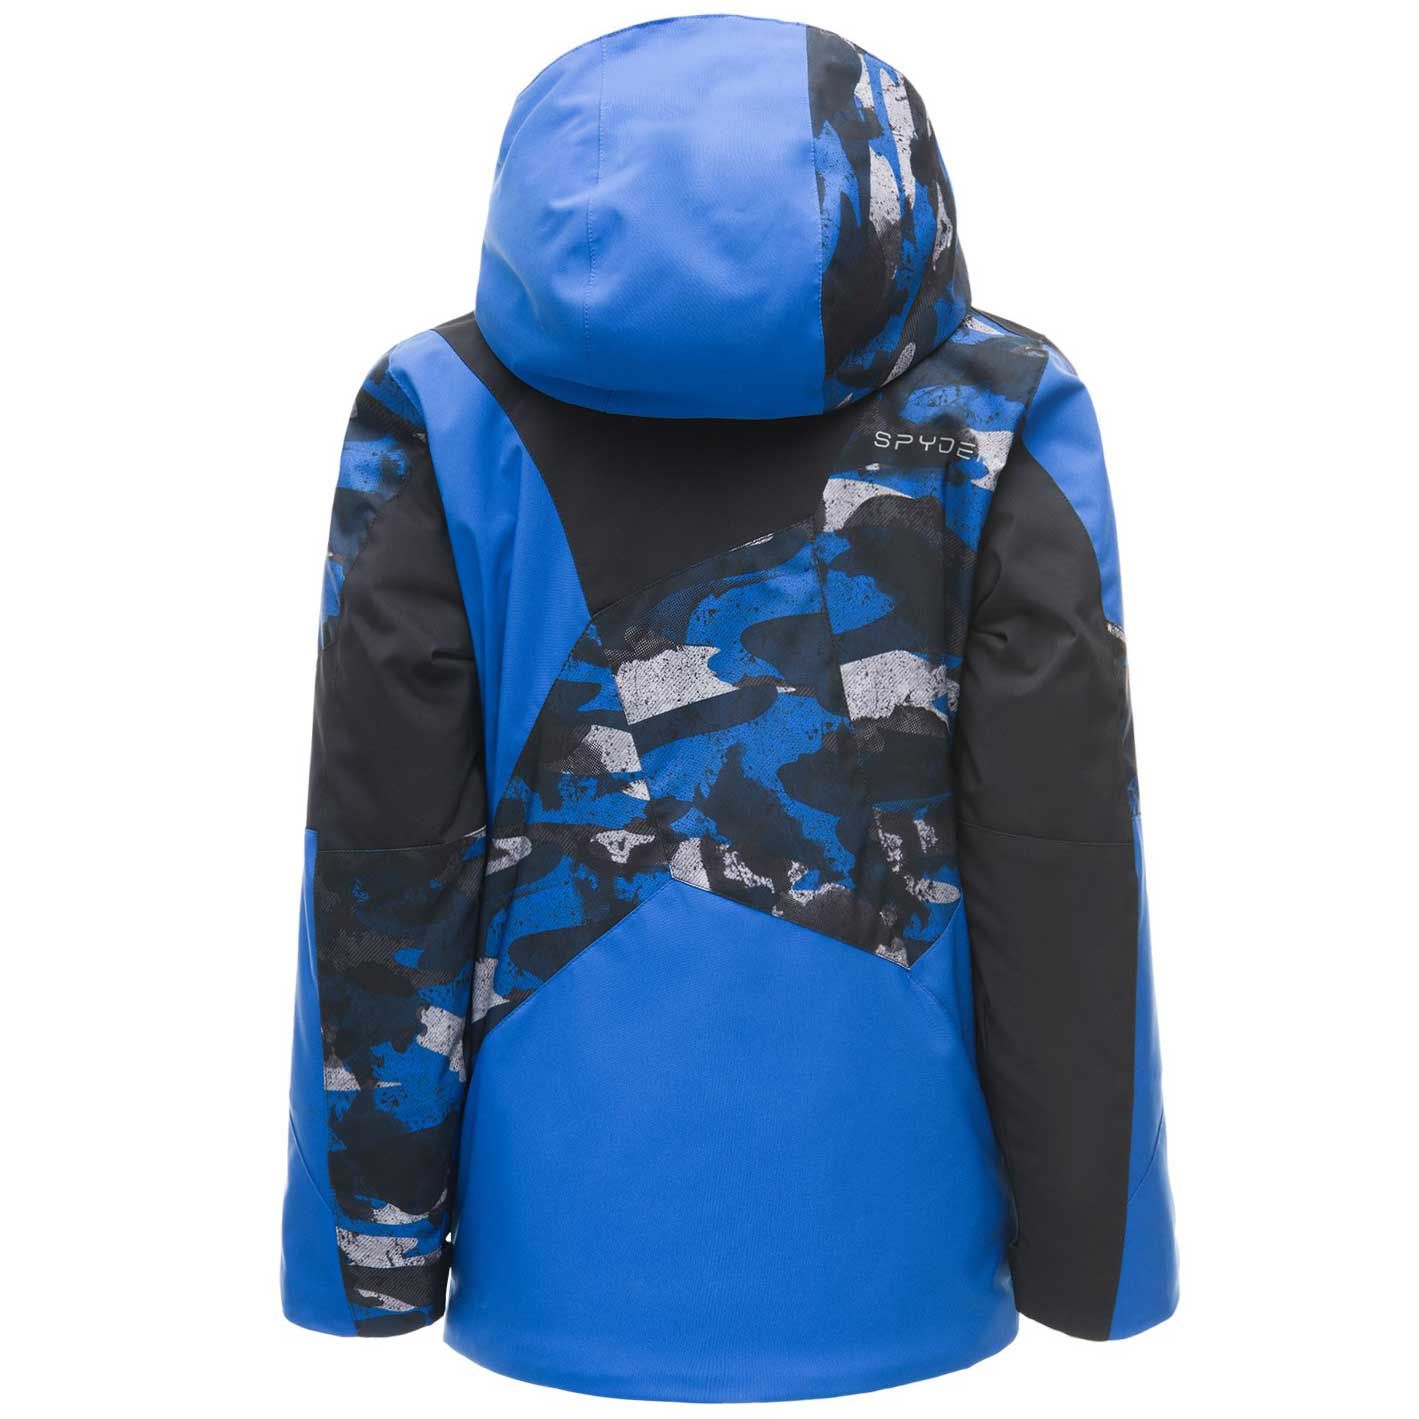 Veste ski garçon K Boy's Leader Jacket - Bleu/Noir